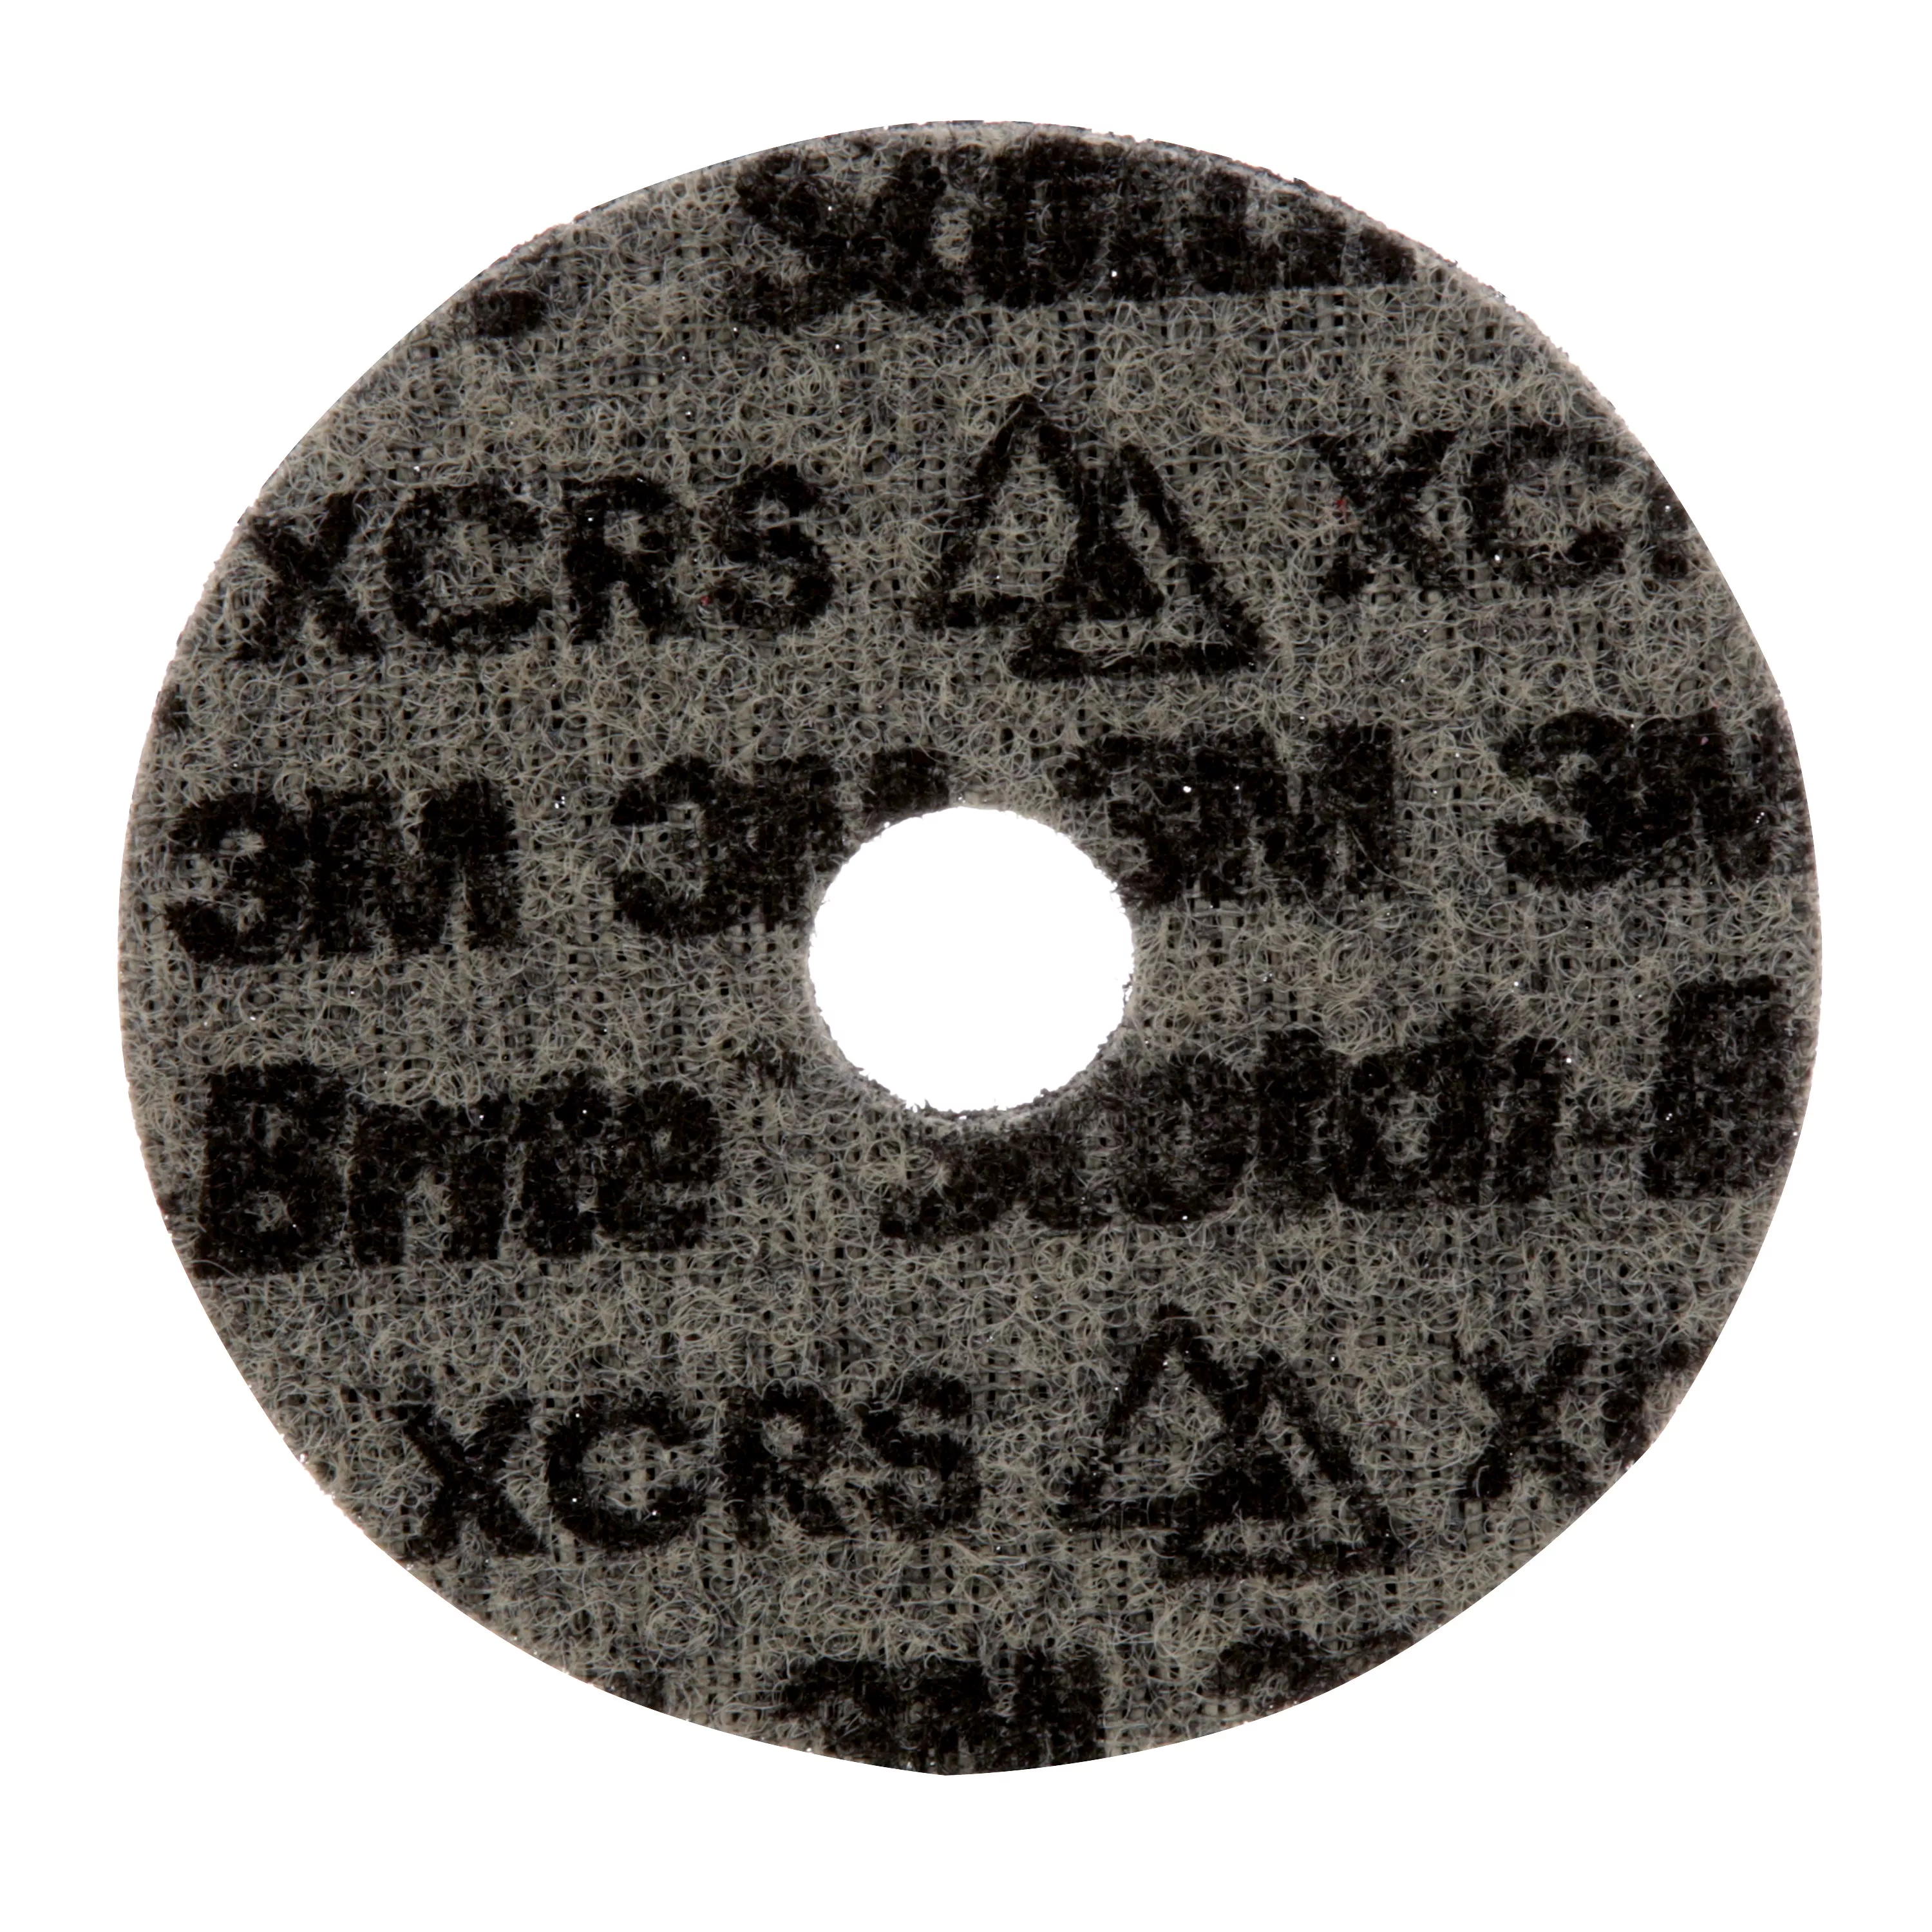 SKU 7100263887 | Scotch-Brite™ Precision Surface Conditioning Disc